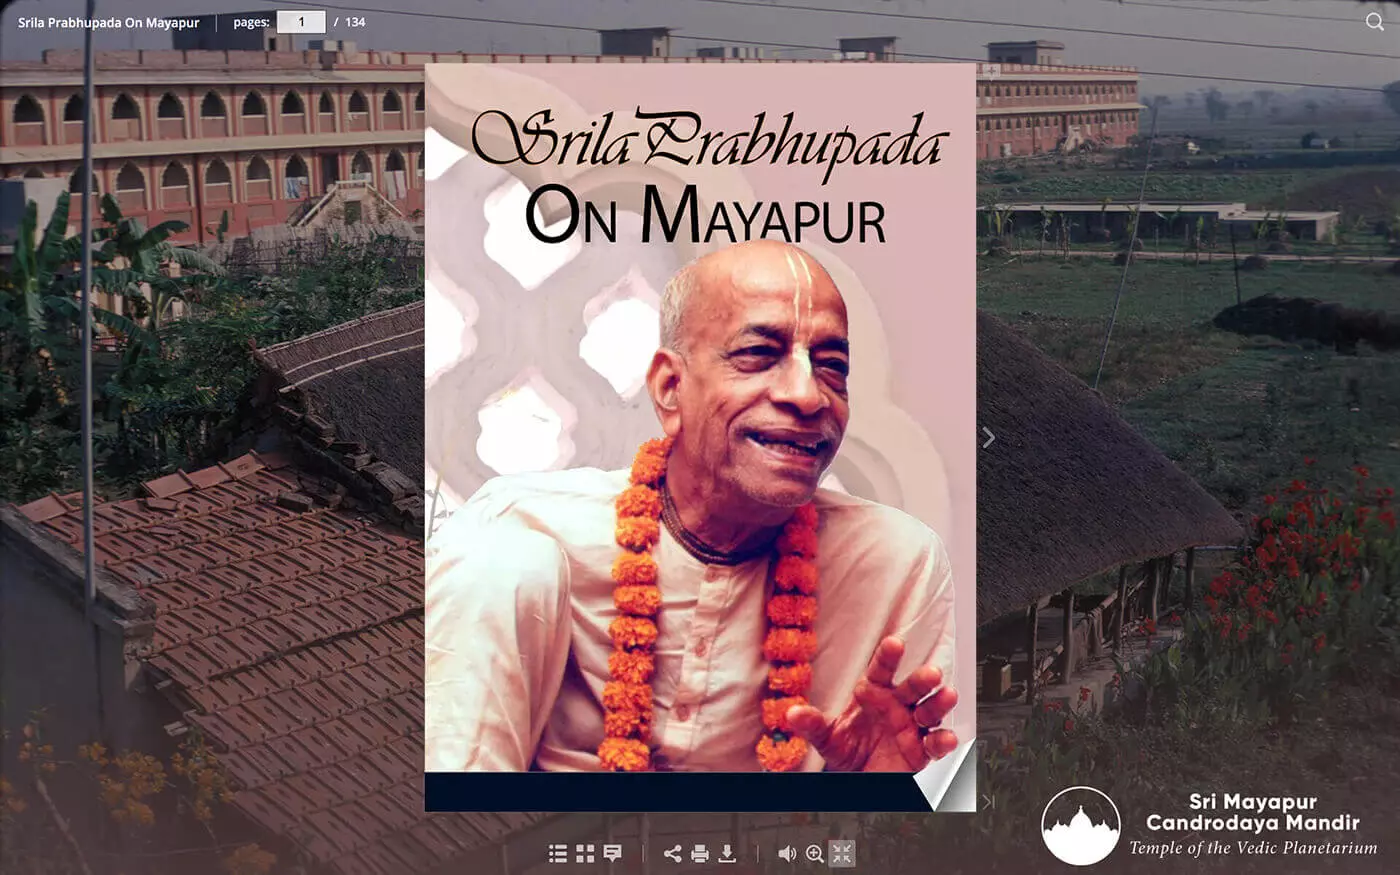 मायापुर पर श्रील प्रभुपाद - TOVP Flipbook Collection